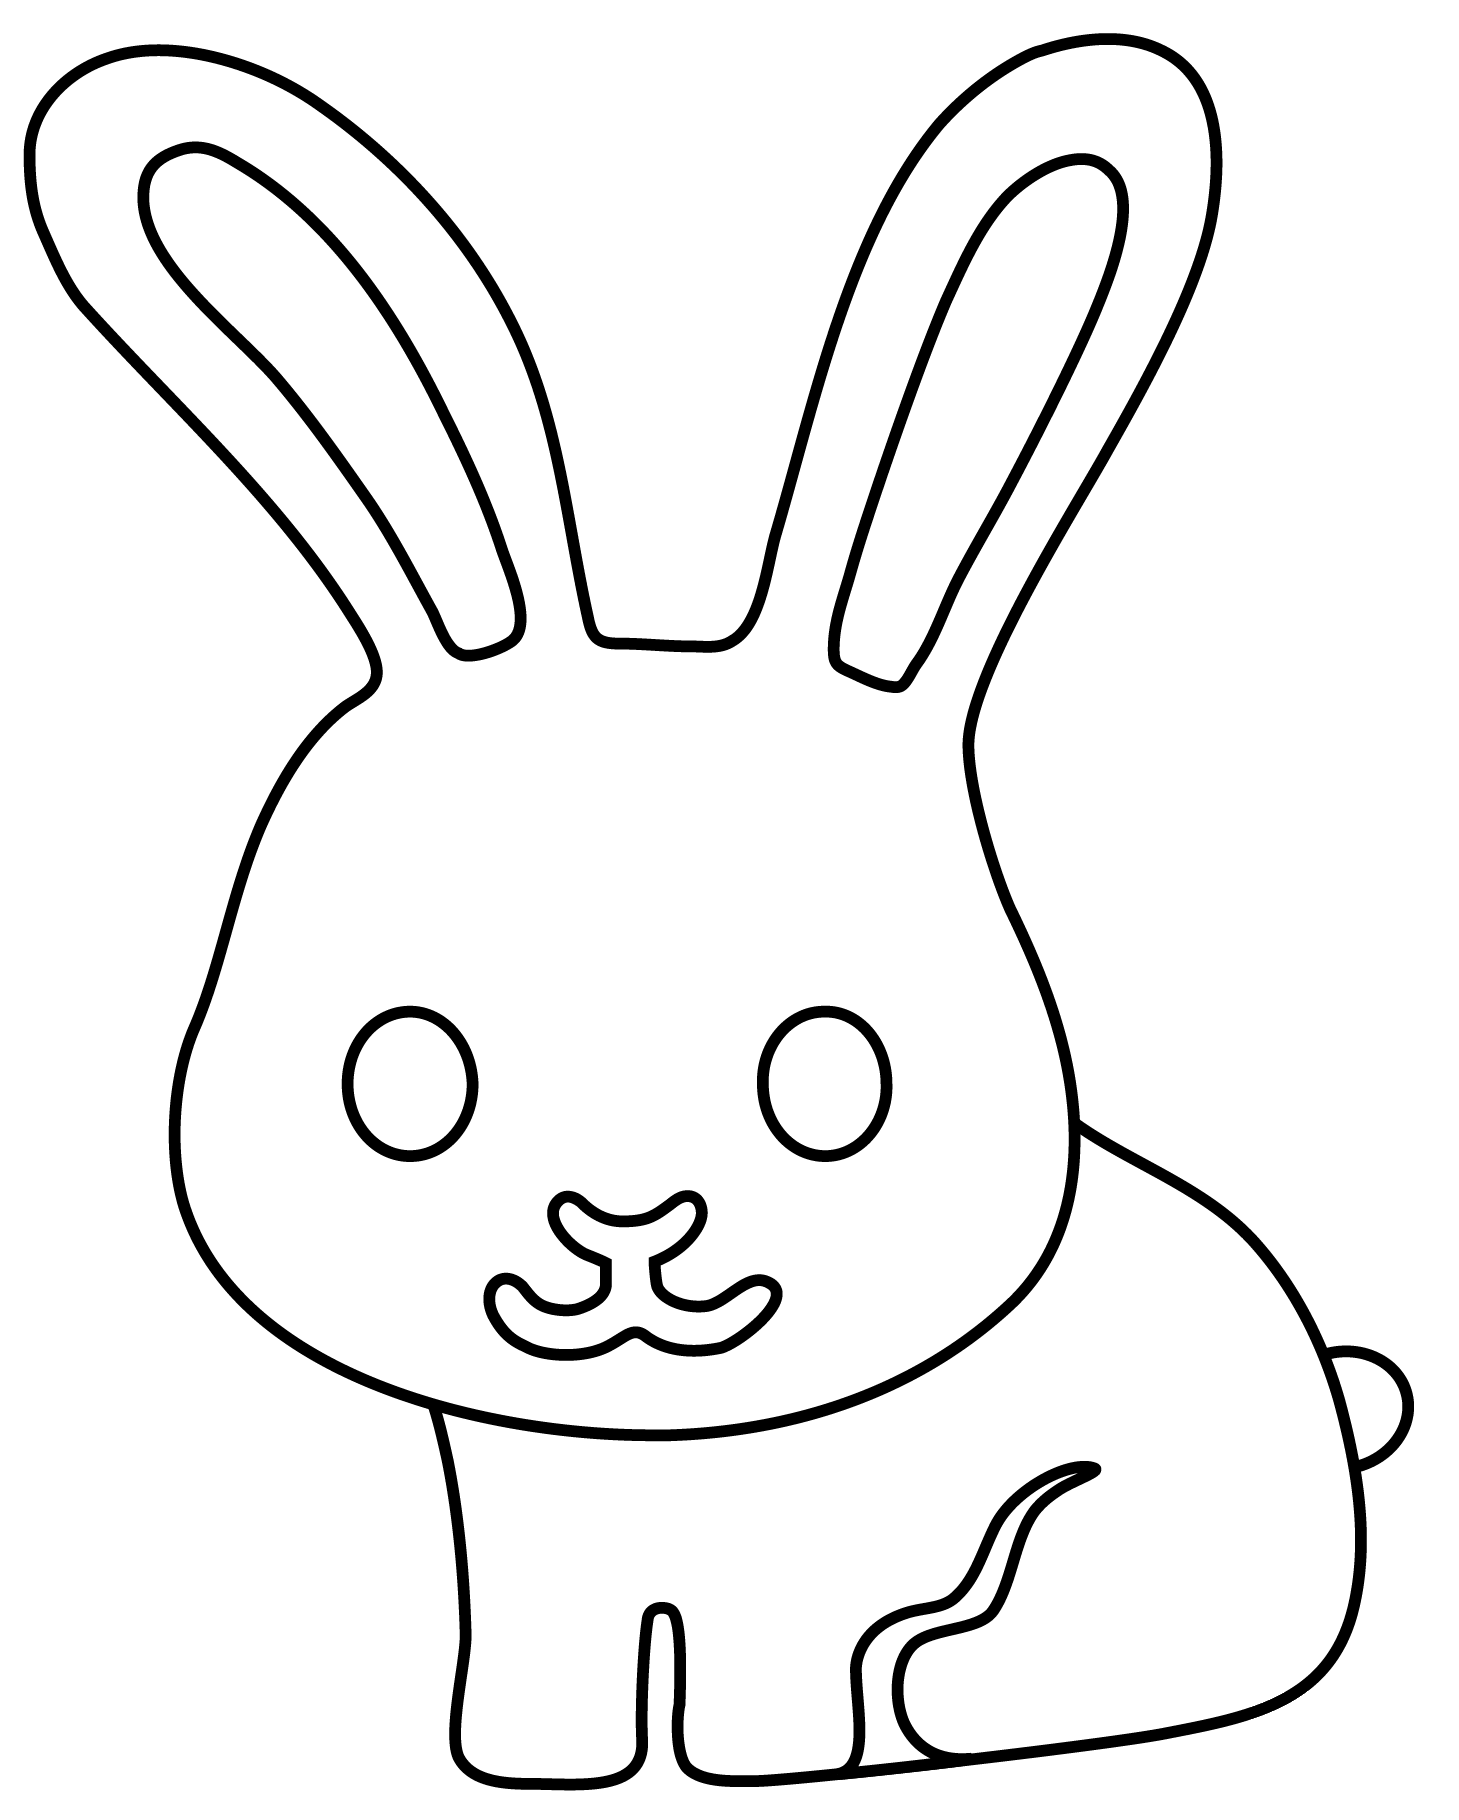 Rabbit Emoji coloring page - ColouringPages